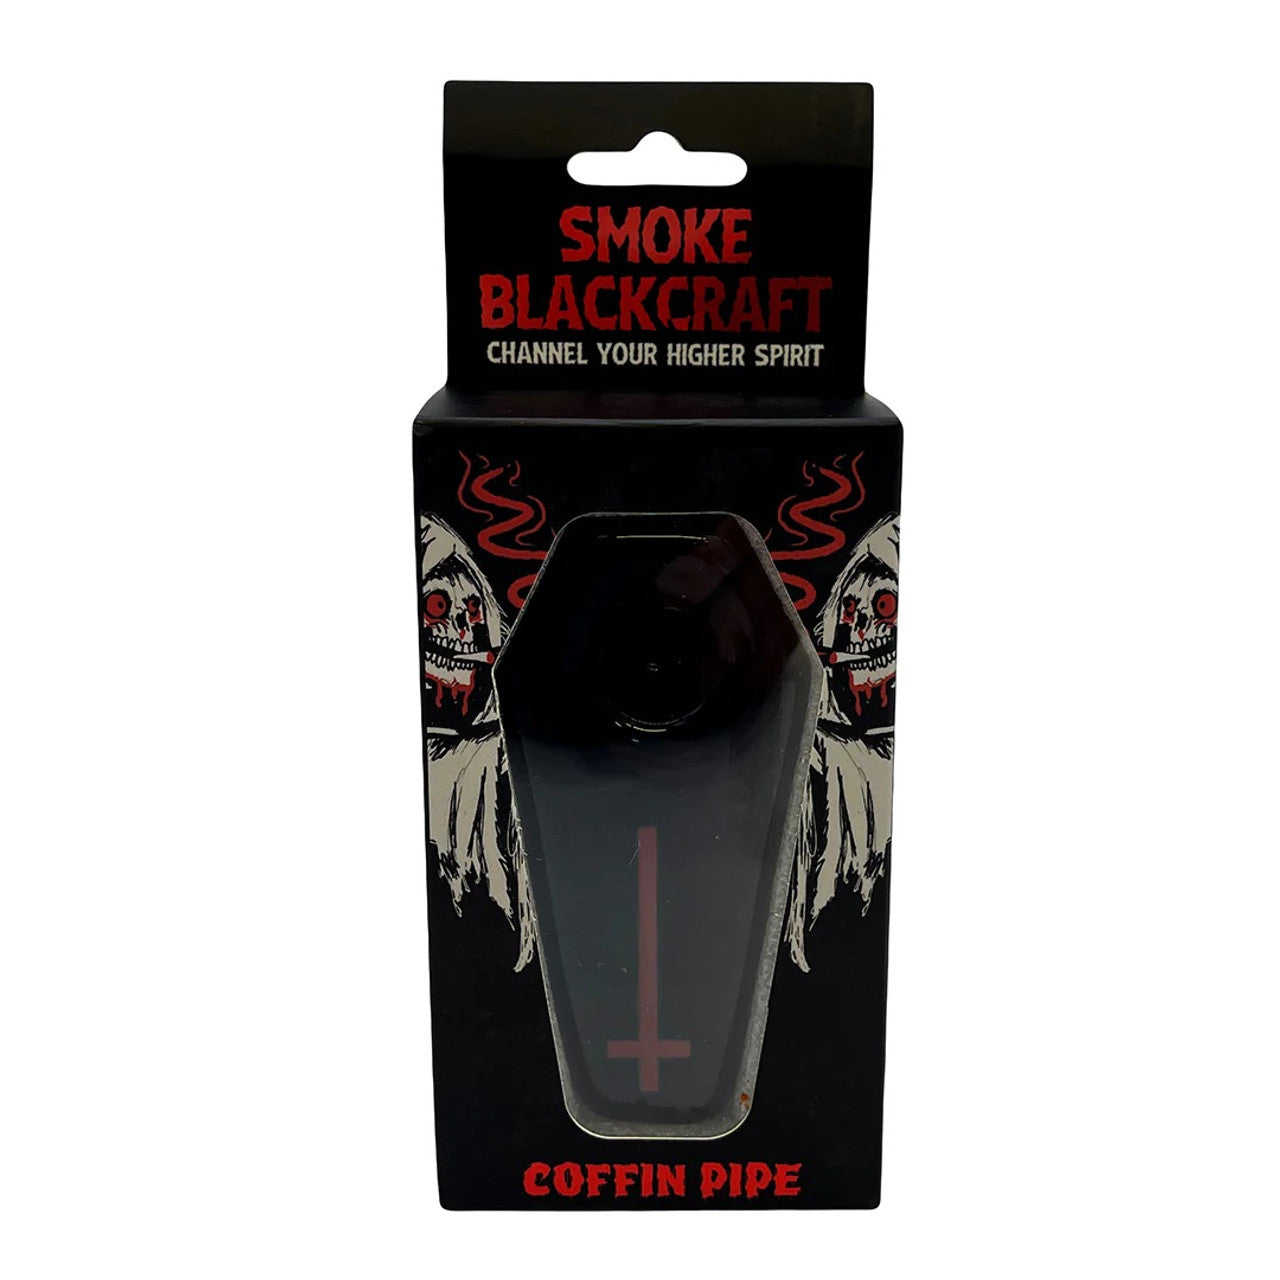 Smoke Blackcraft Coffin Pipe Black Box